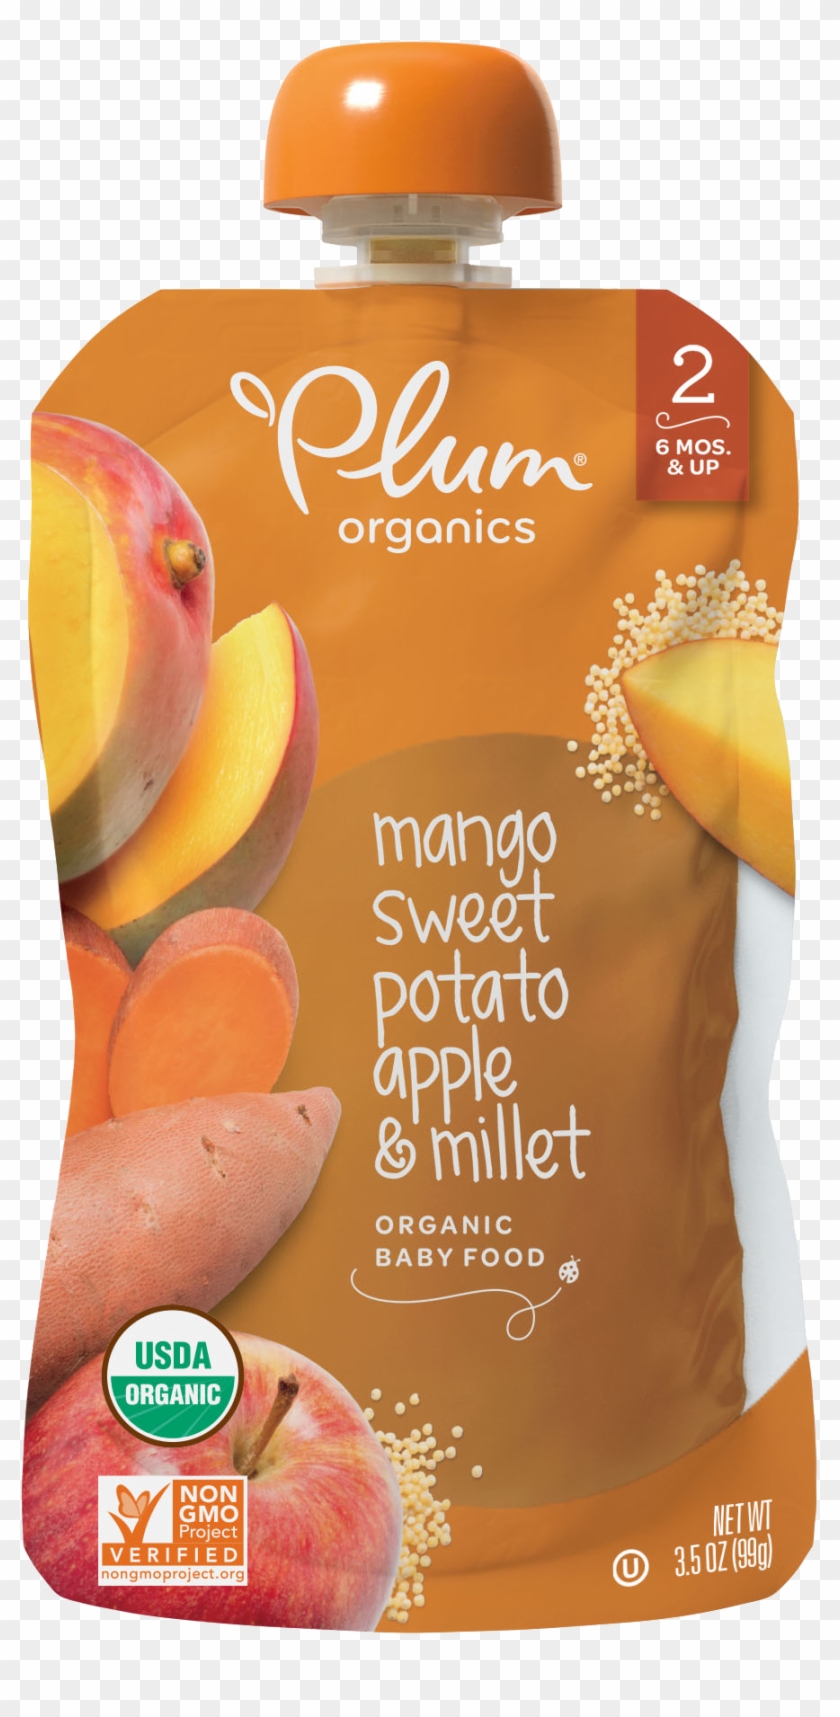 Mango, Sweet Potato, Apple & Millet - Baby Food Packaging Clipart #702013